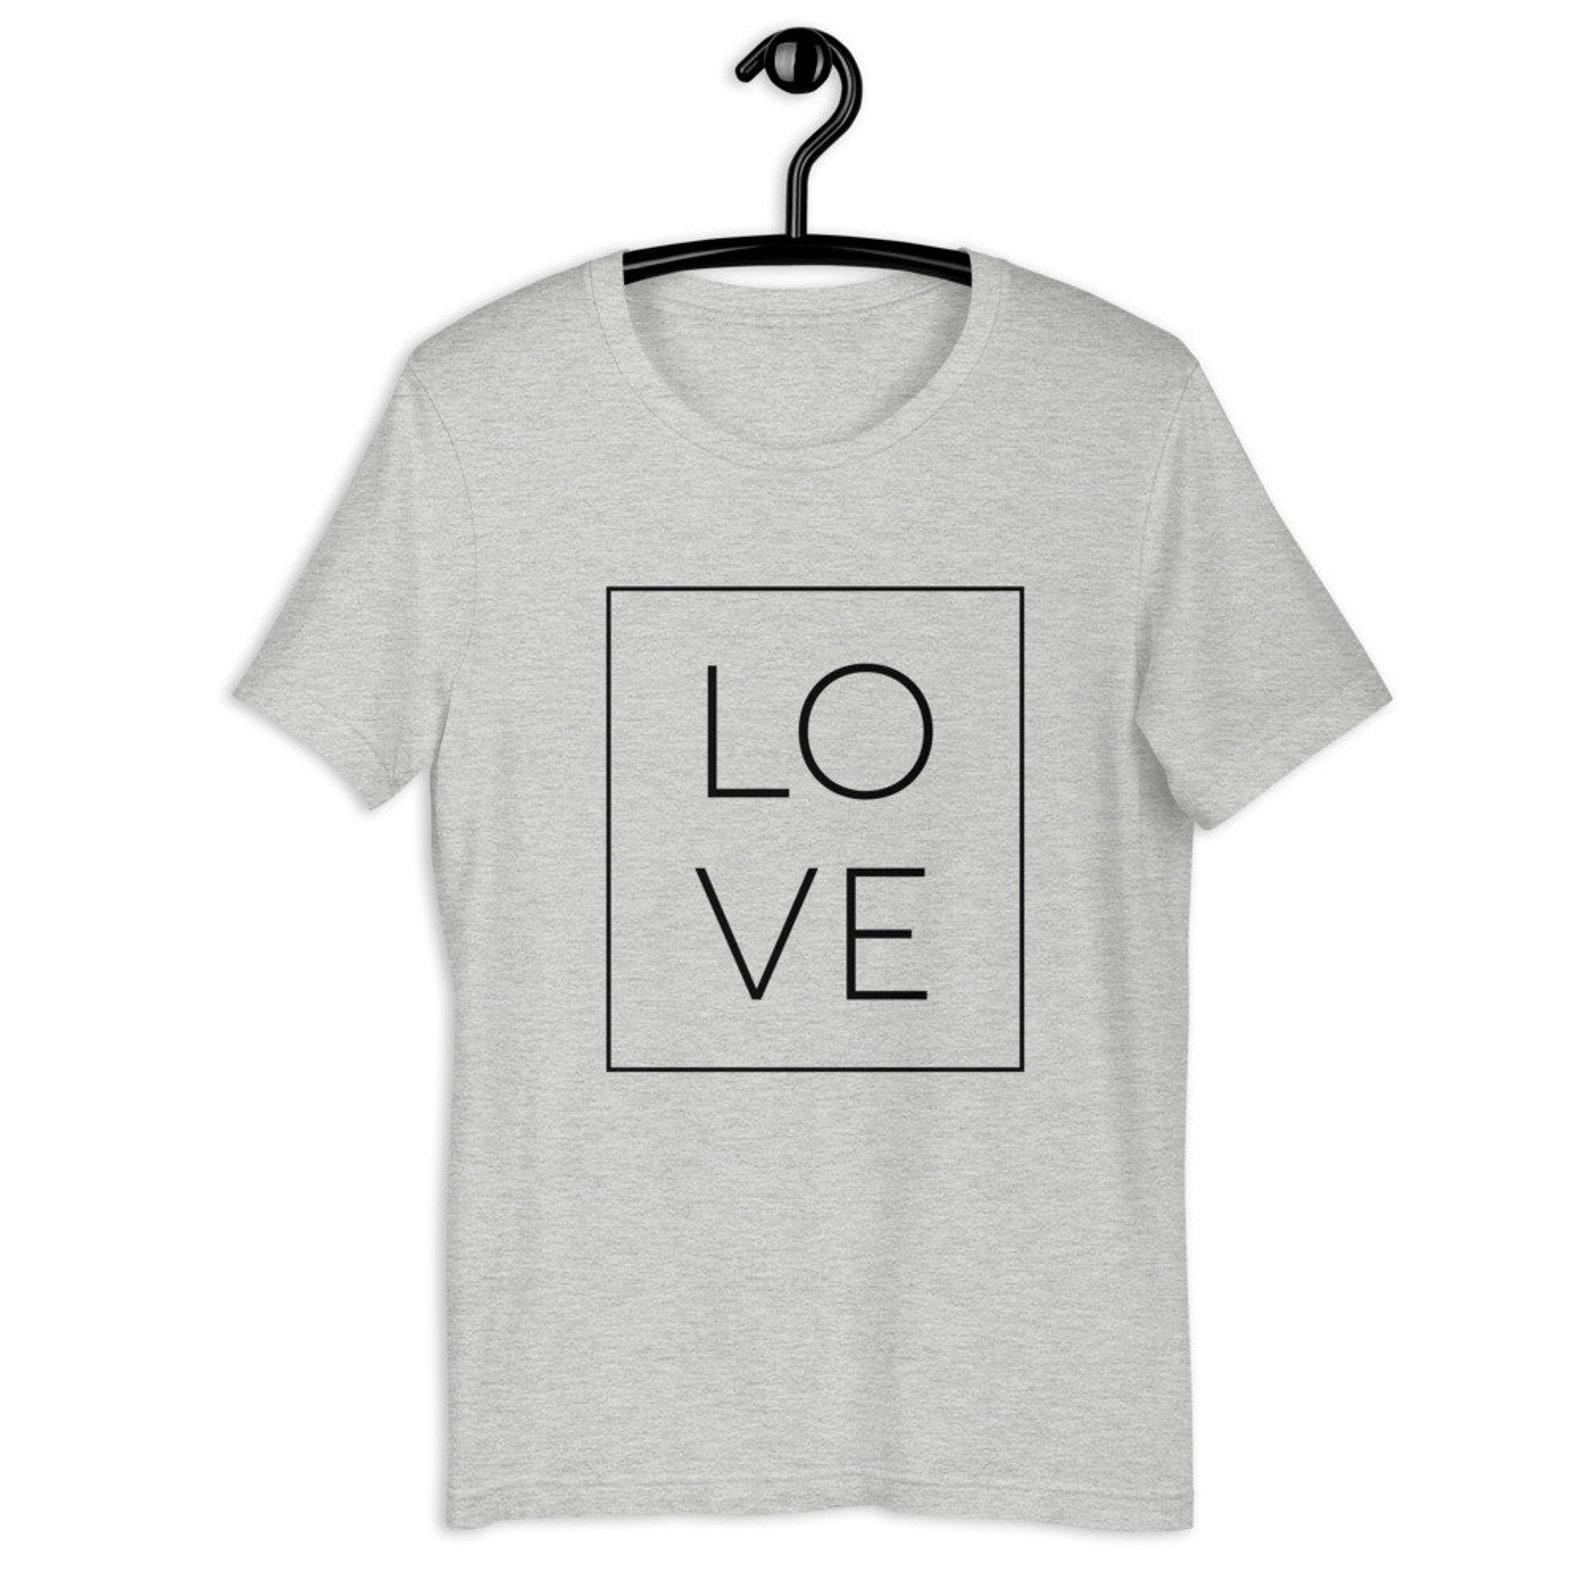 Love ShirtLove is Love ShirtInspirational ShirtsLife | Etsy